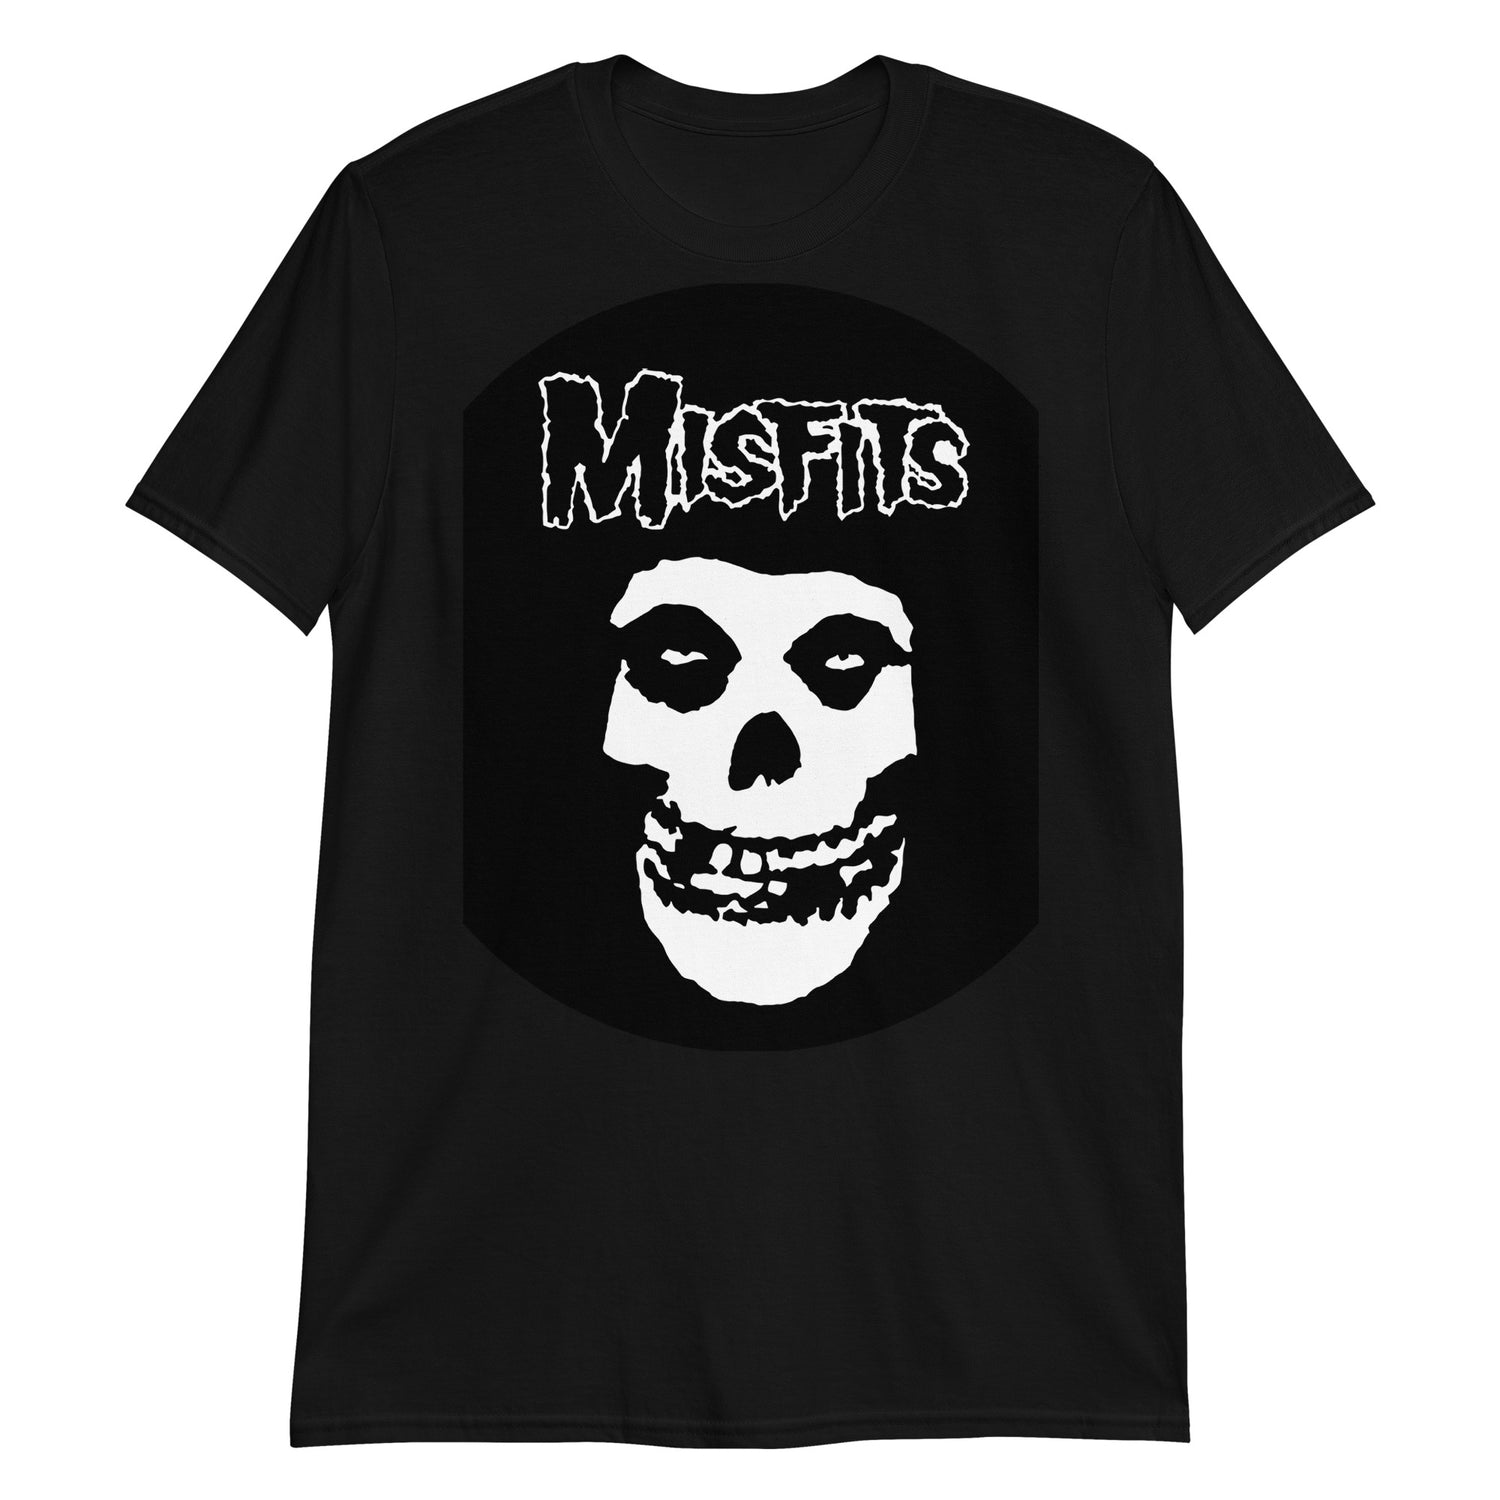 The Misfits T-Shirt - PrintWave Tees